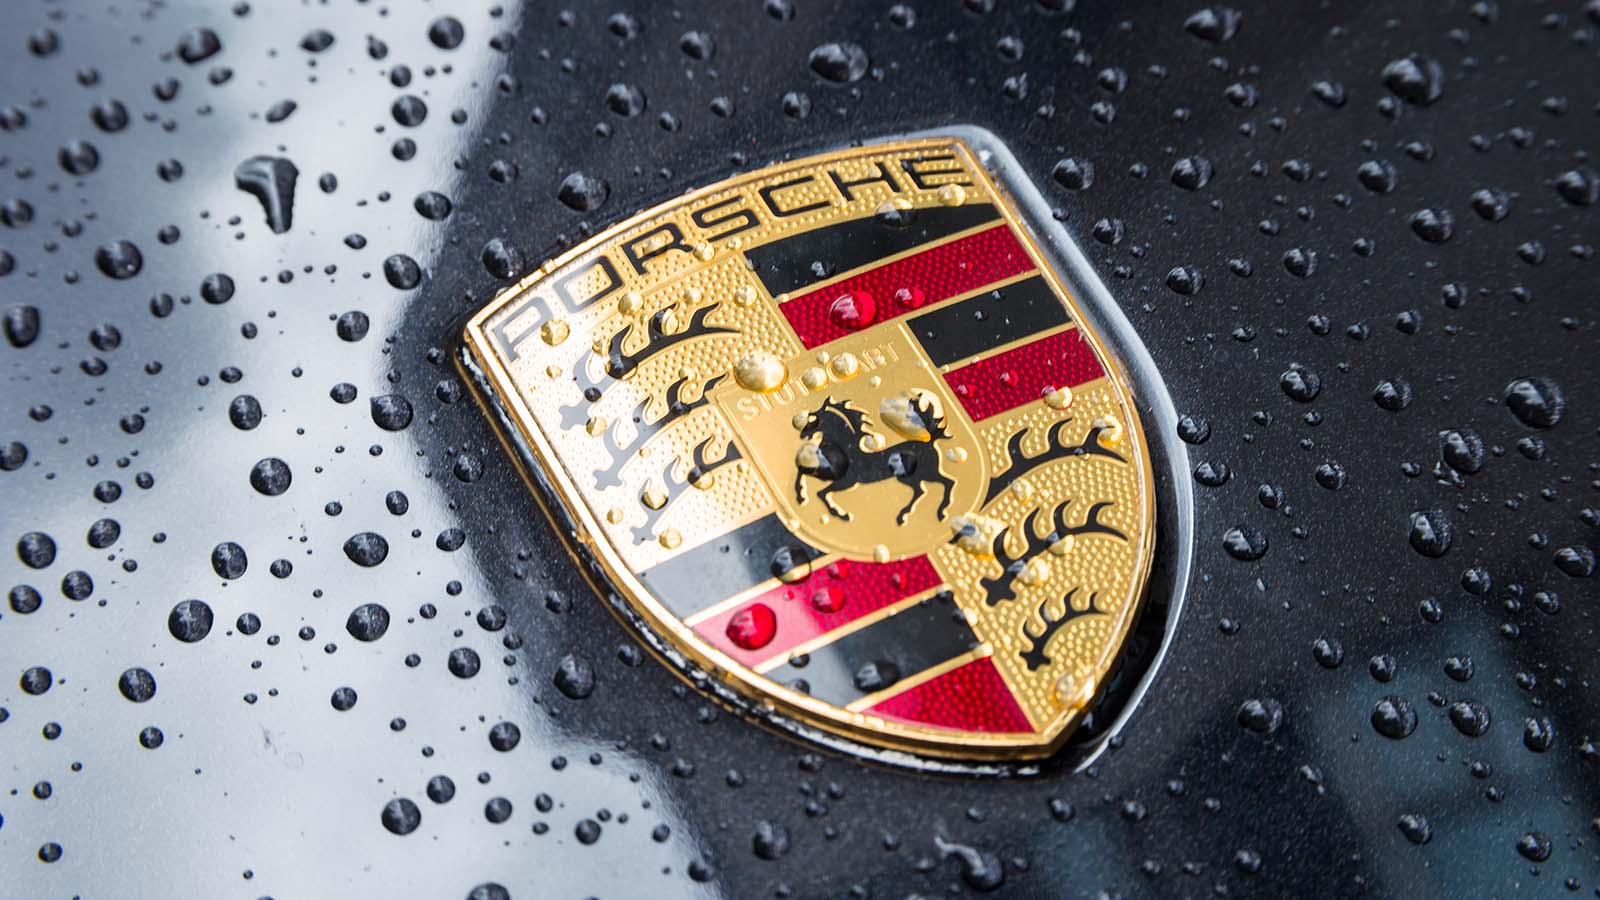 The Porsche logo on a black vehicle.